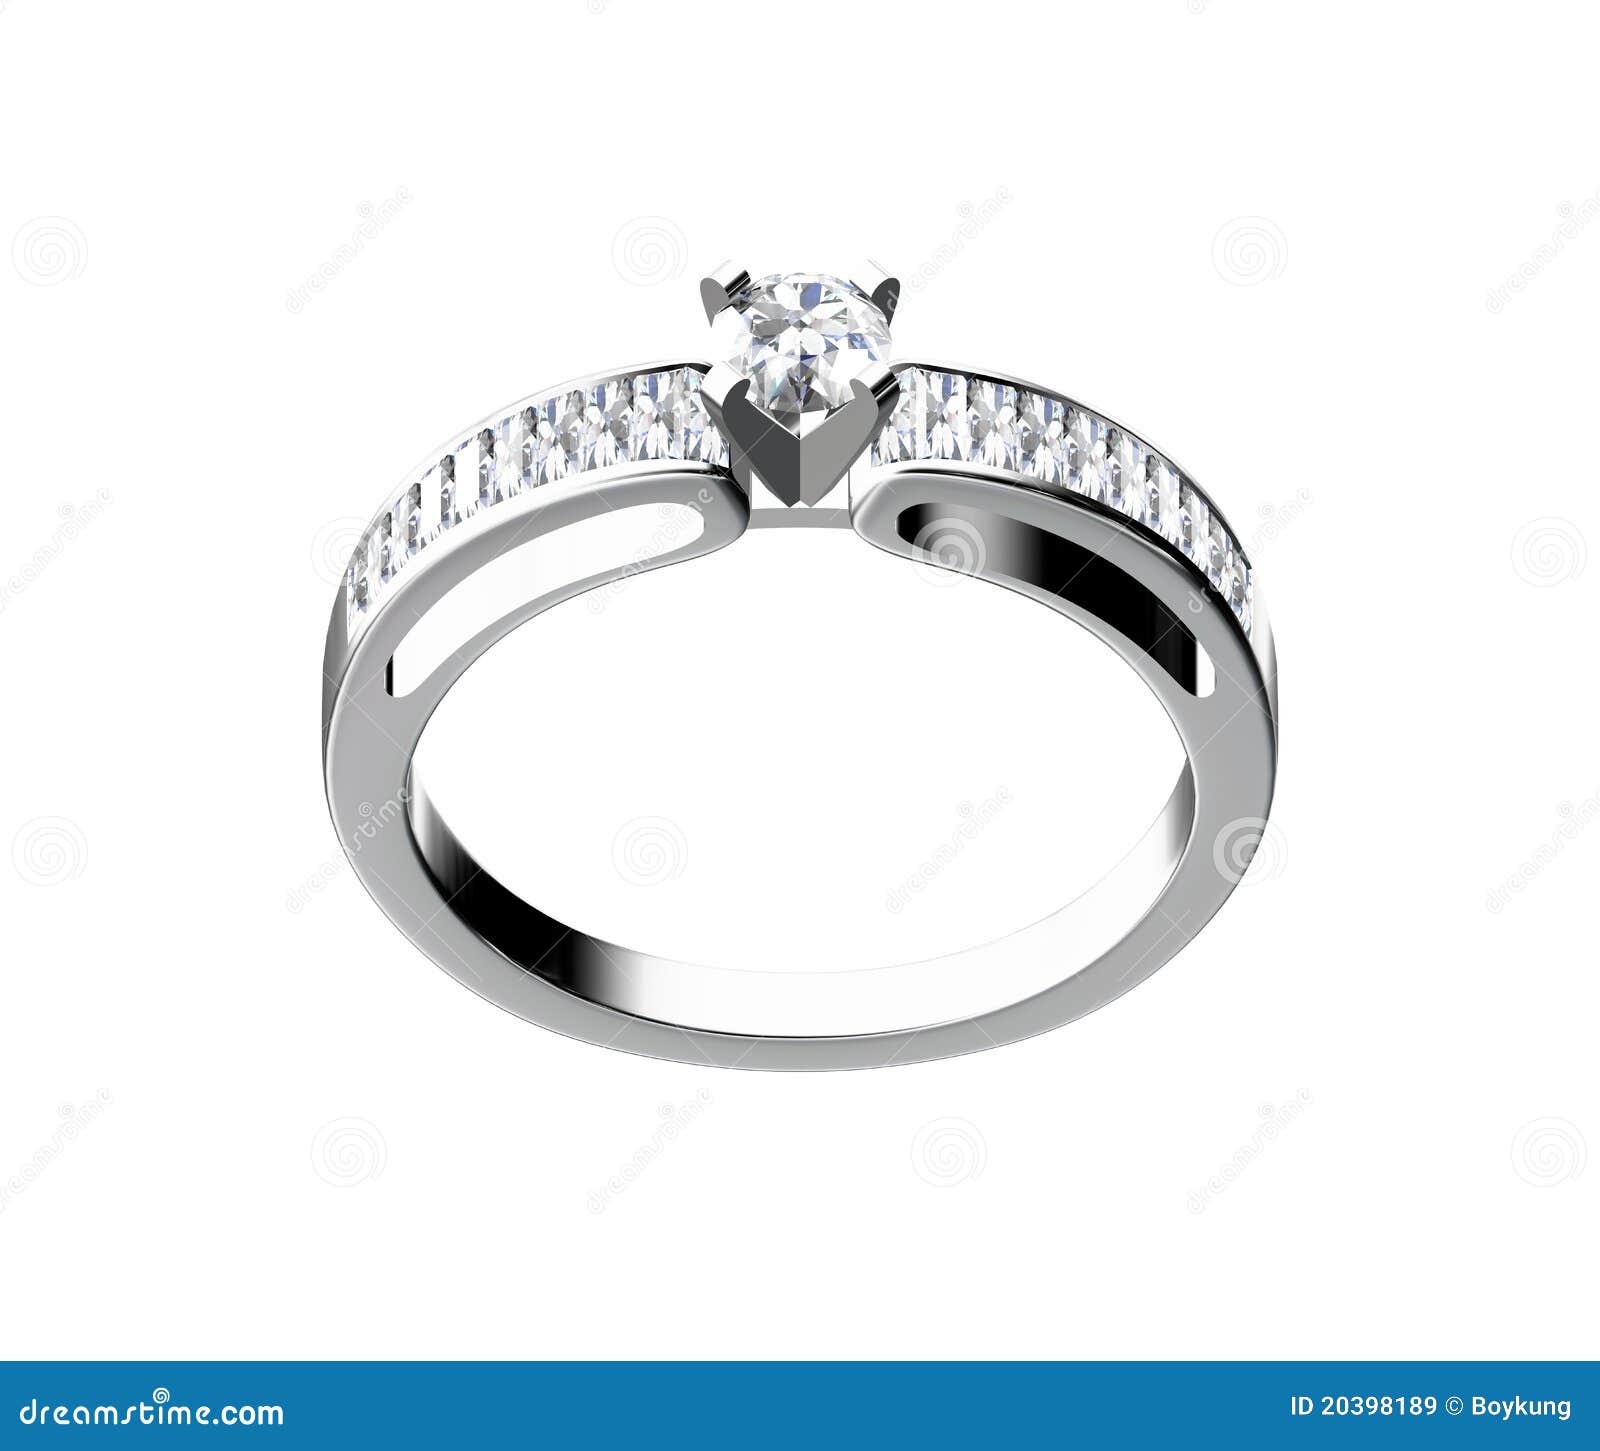 Wedding ring stock illustration. Illustration of beauty - 20398189